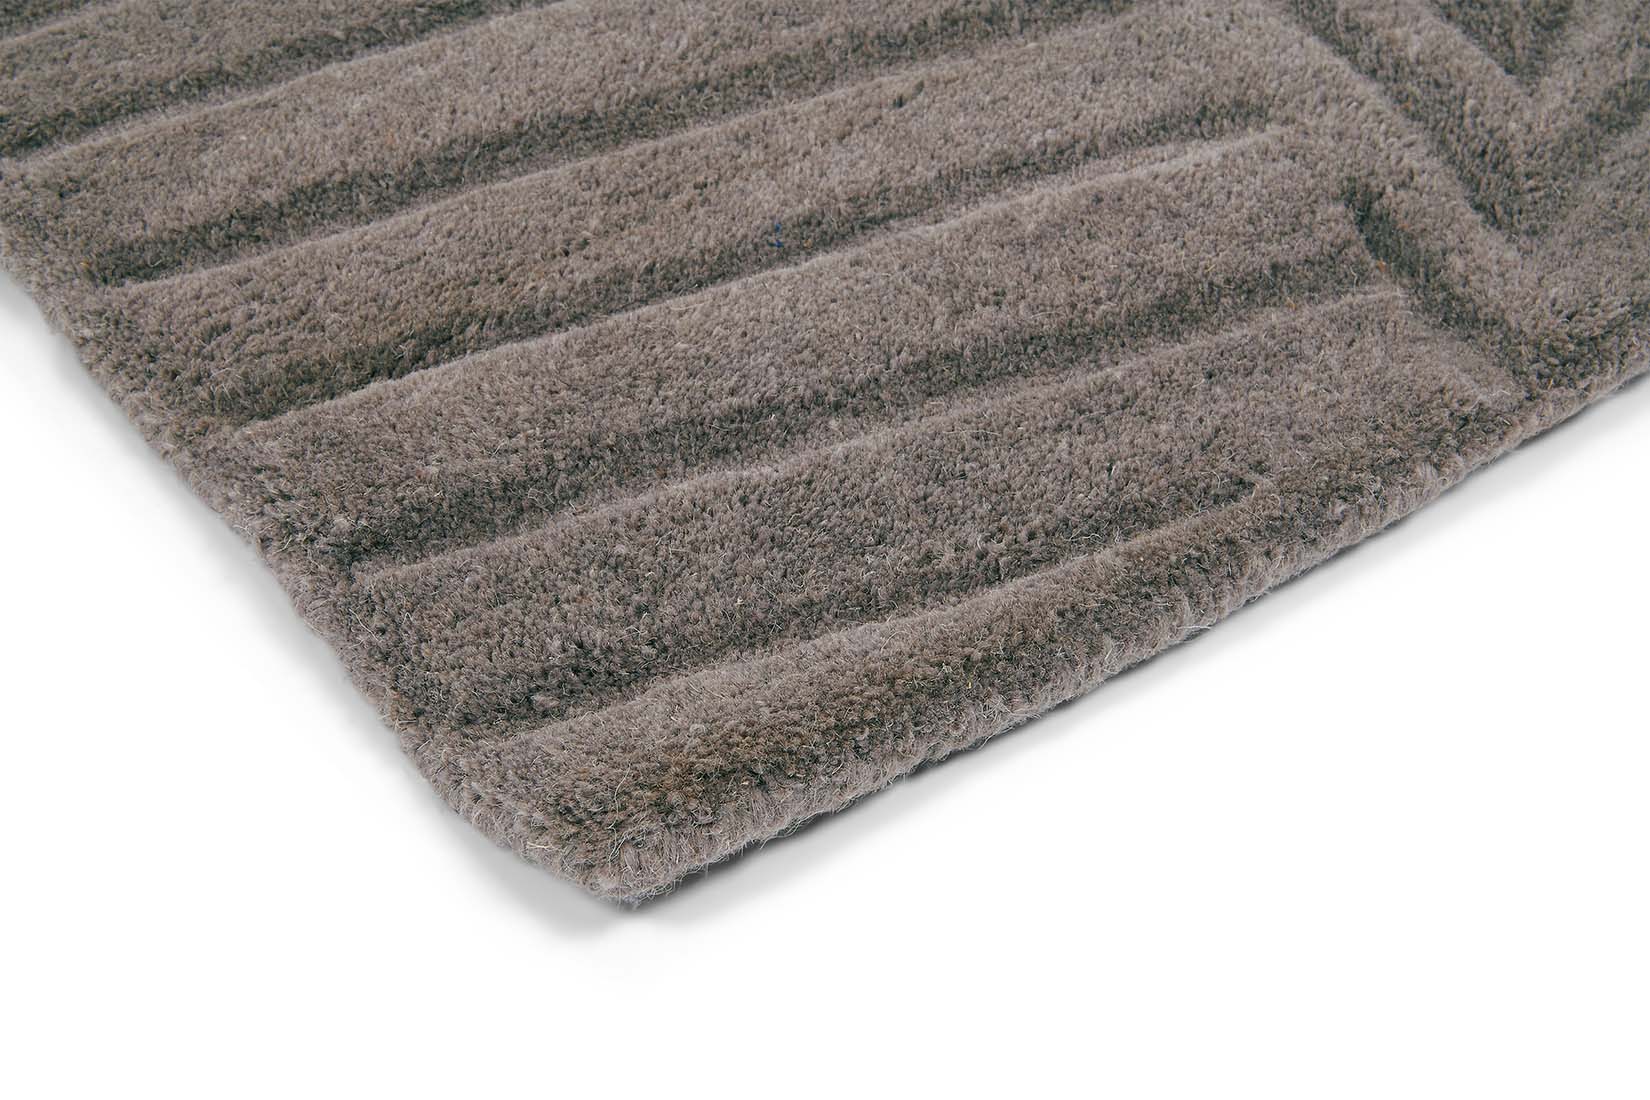 Rectangular grey rug with engraved leaf pattern